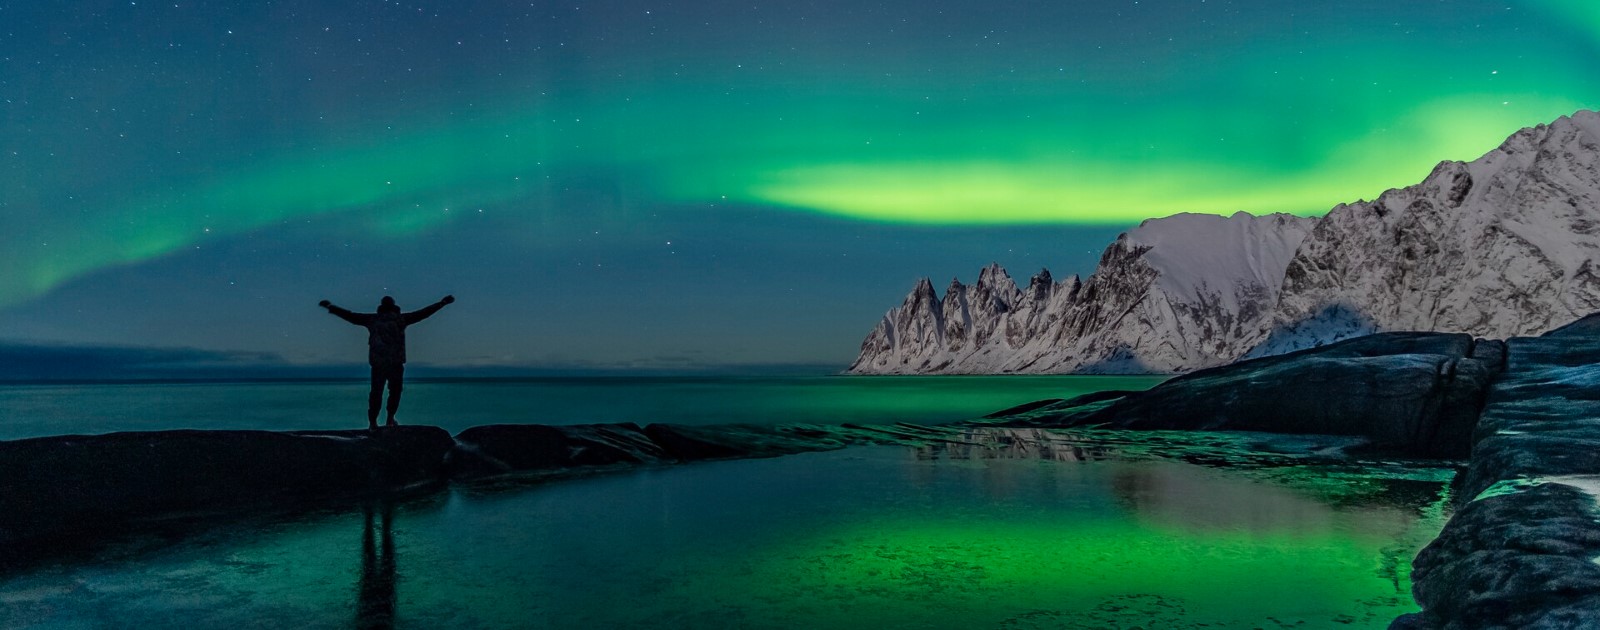 What Causes the Aurora Borealis' Colors?